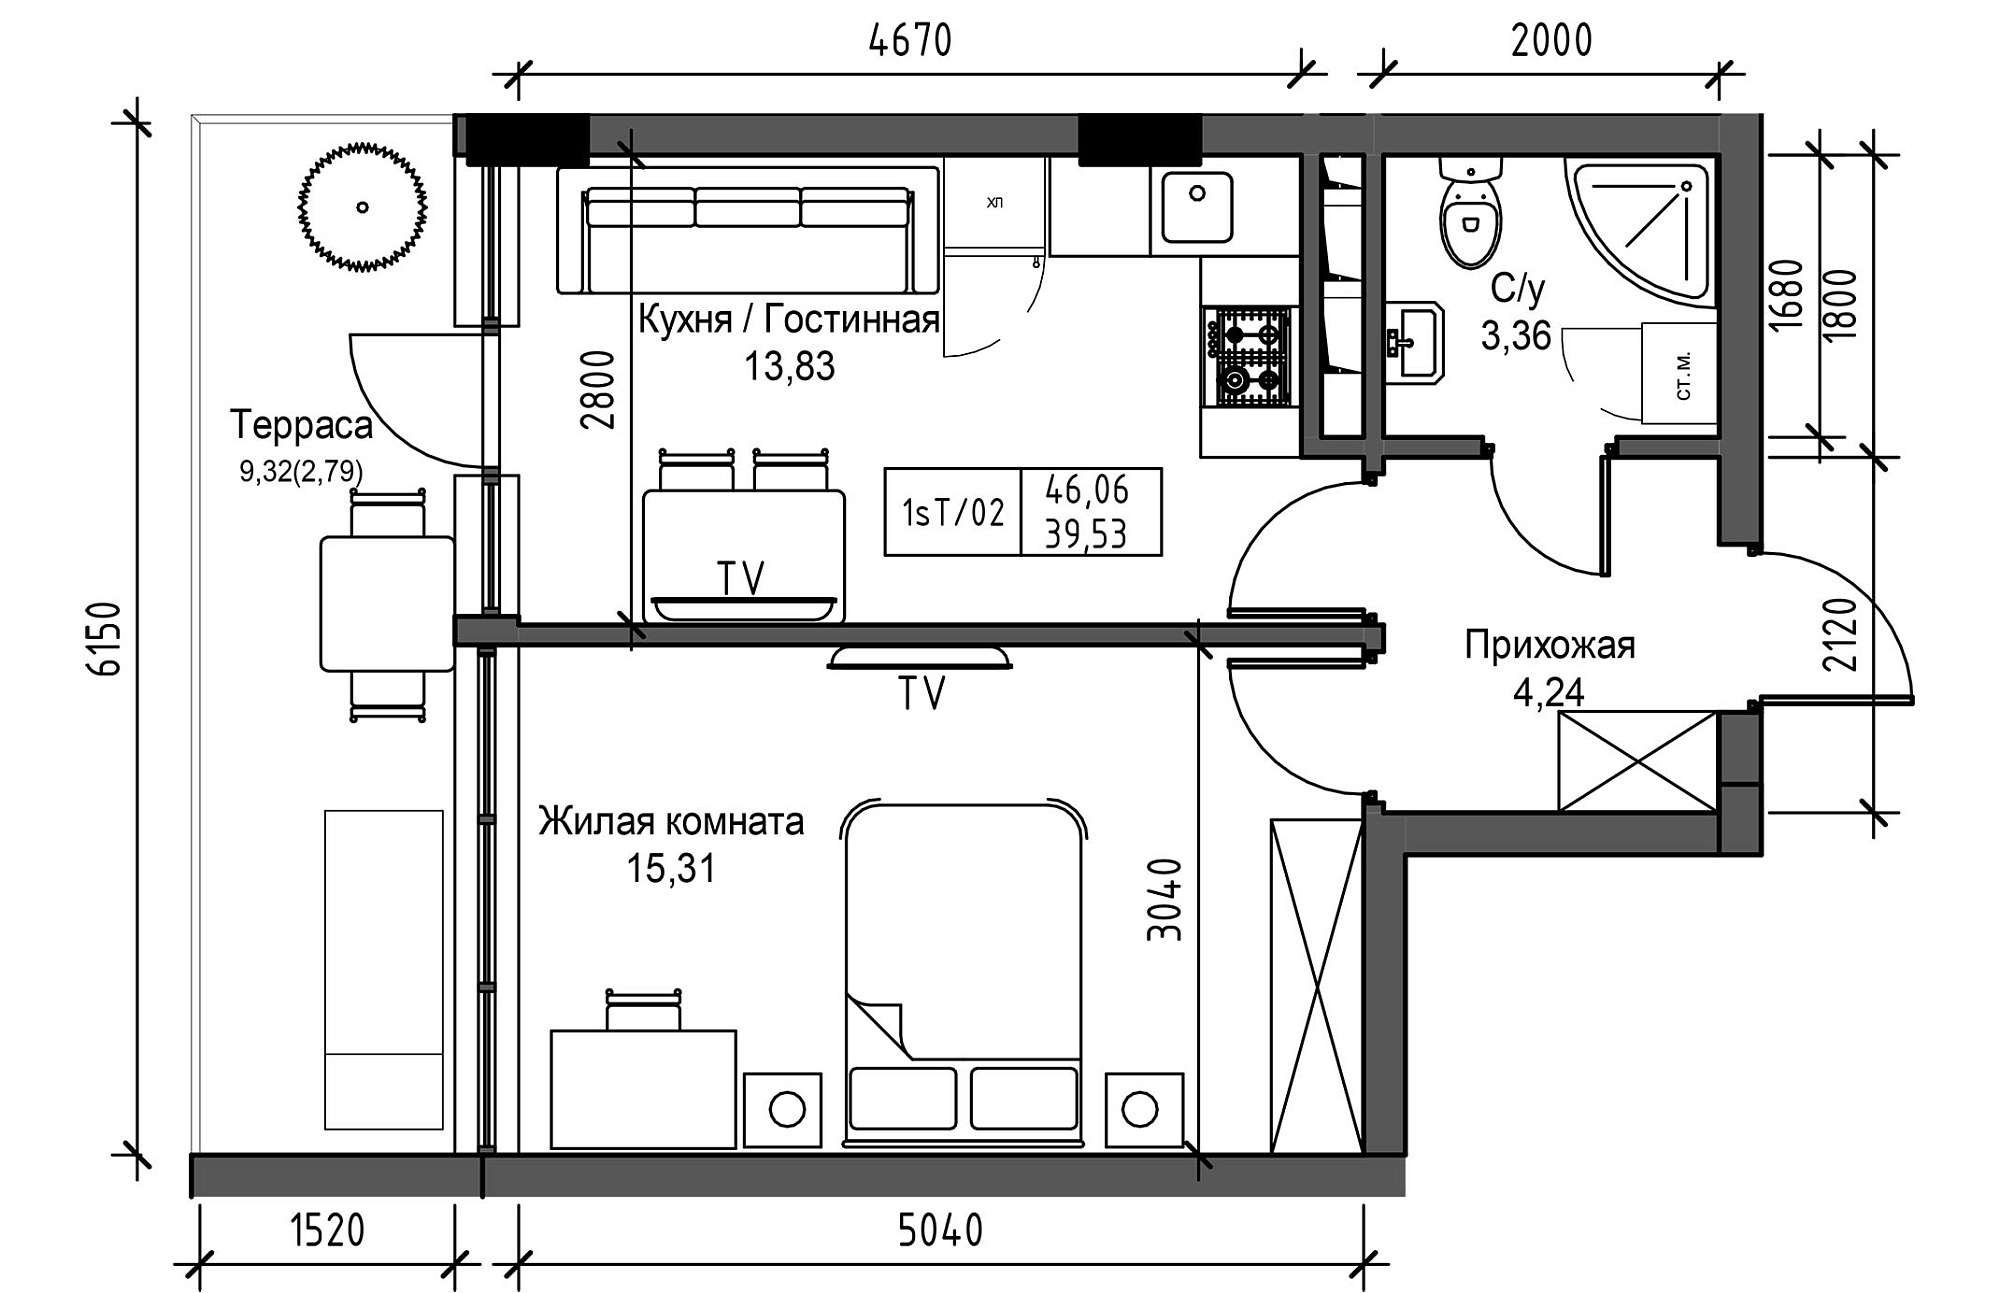 Планування 1-к квартира площею 39.53м2, UM-003-06/0060.